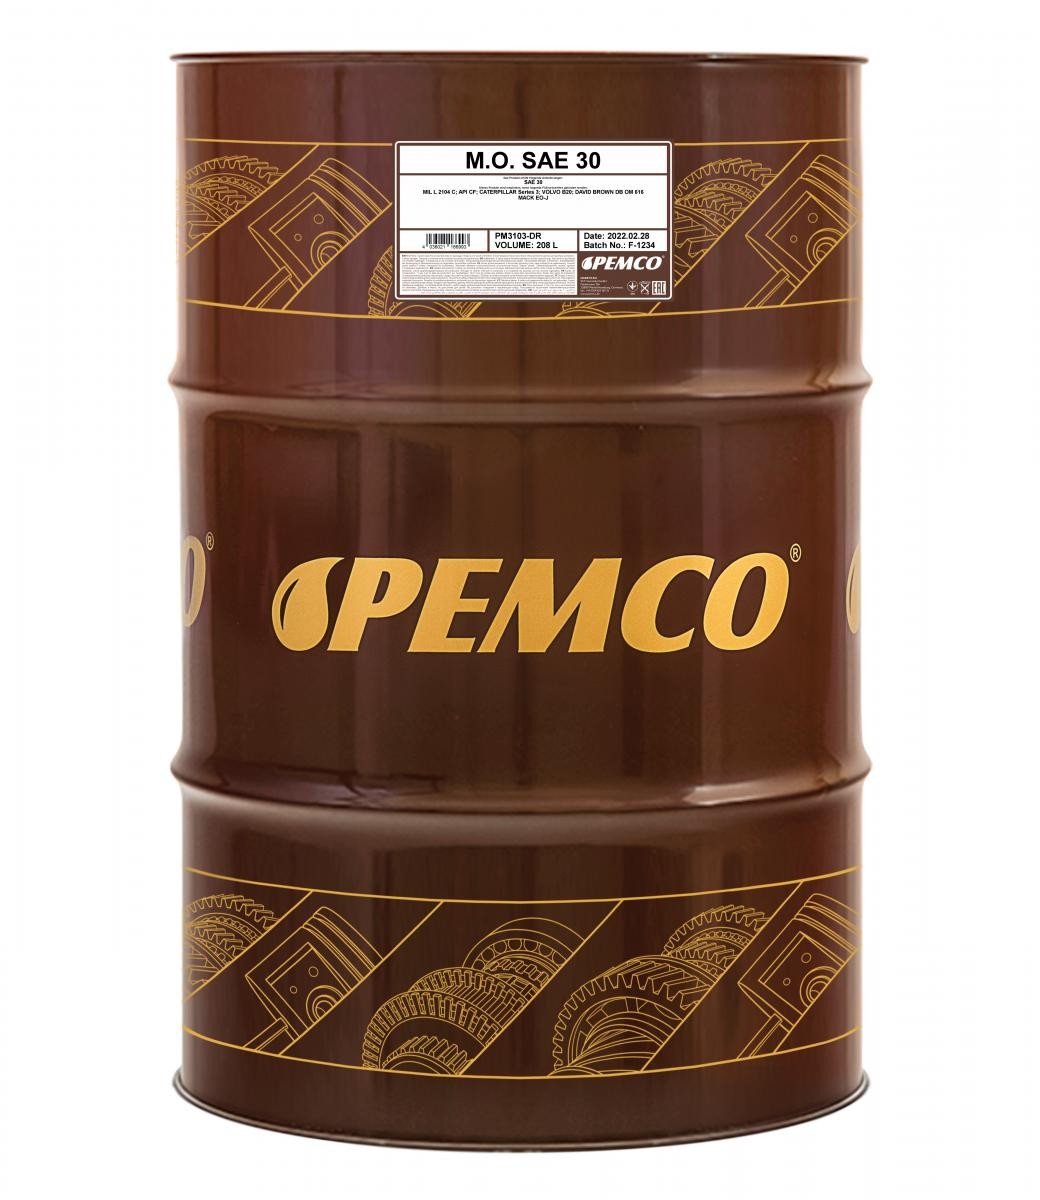 Engine oil MIL L 2104 C PEMCO - PM3103-DR M.O. SAE 30